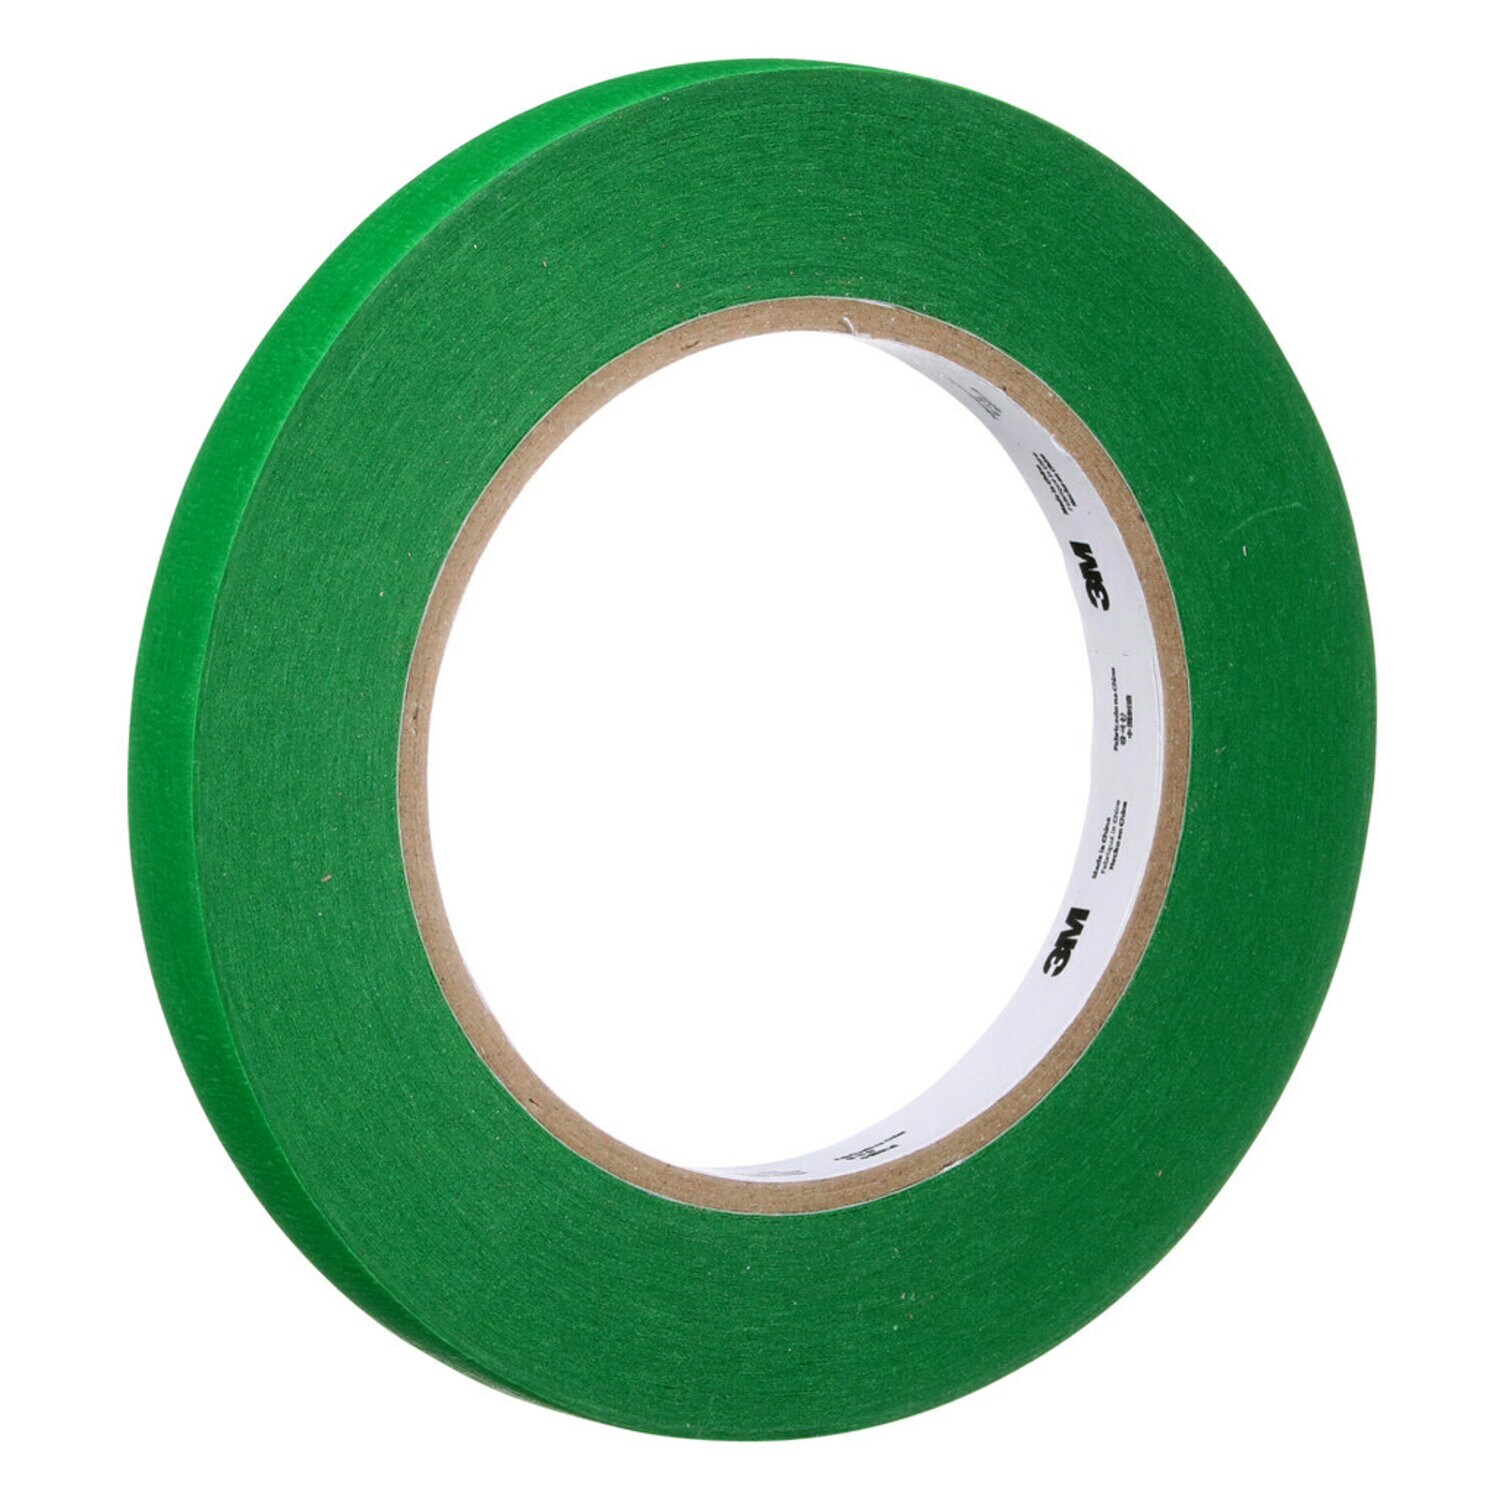 7100299467 - 3M UV Resistant Green Masking Tape, 12 mm x 55 m, 96 Rolls/Case